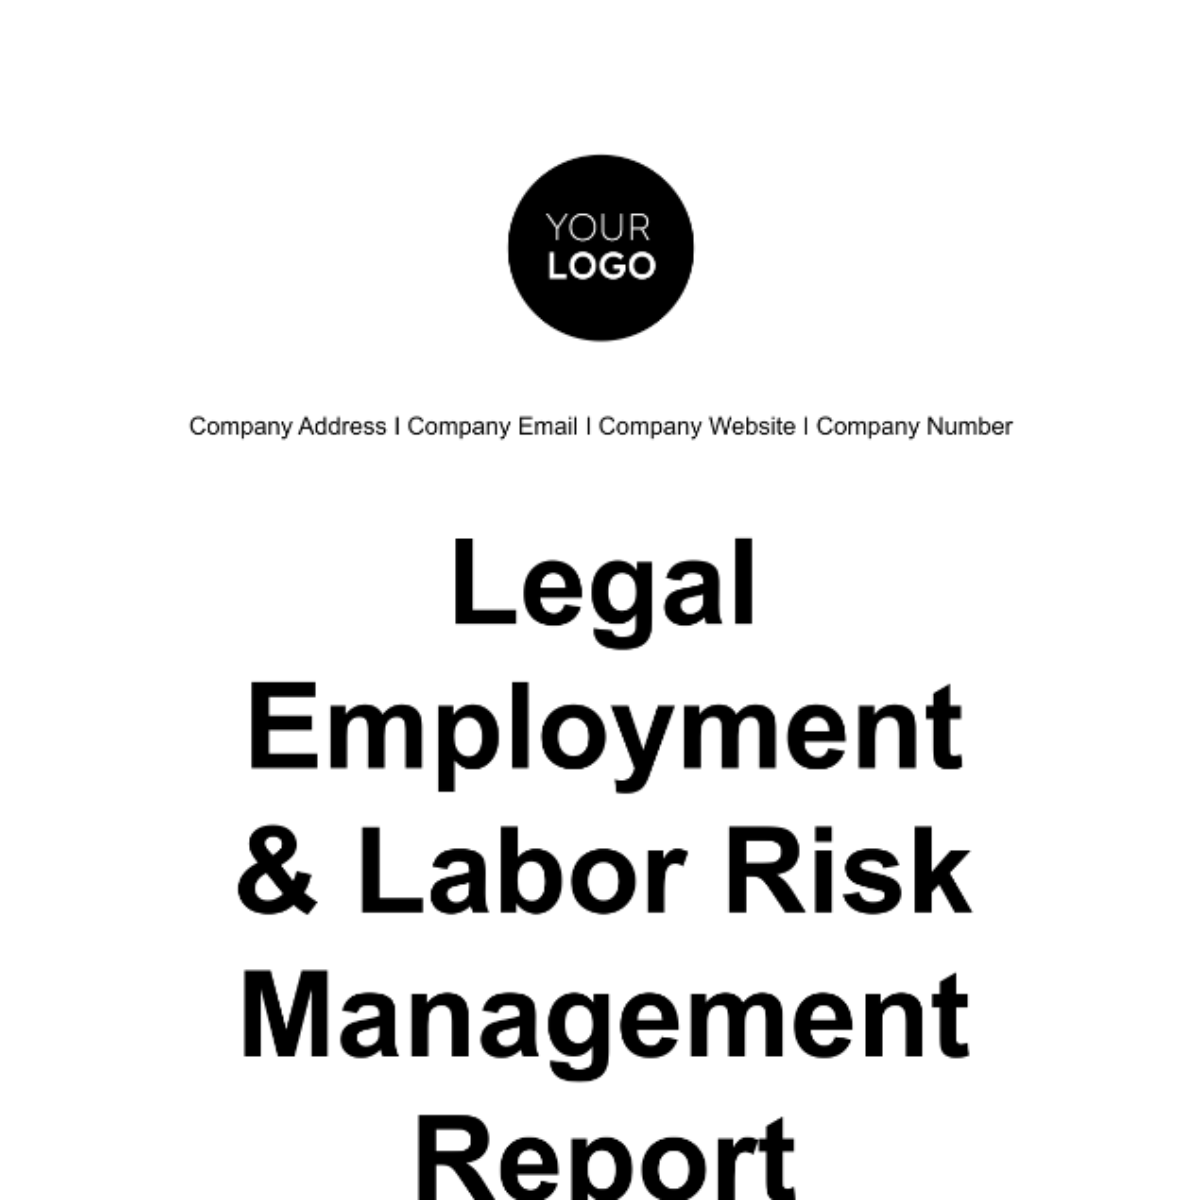 Legal Employment & Labor Risk Management Report Template